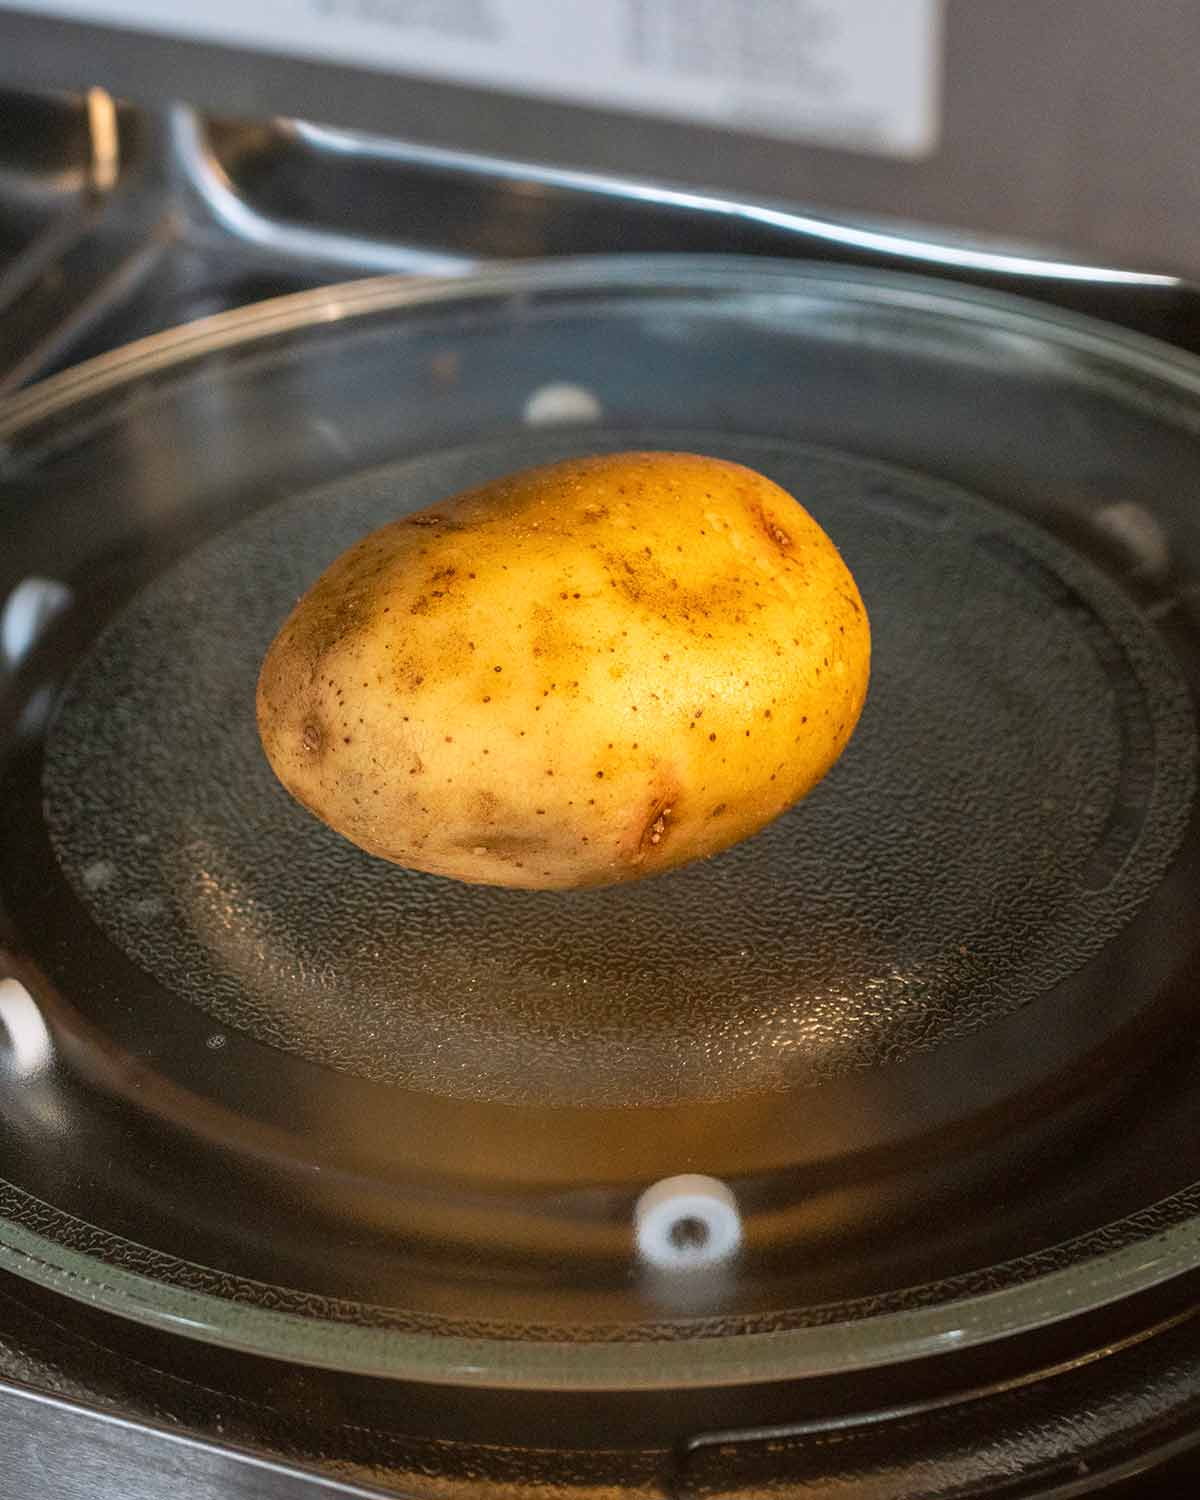 A potato inside a microwave.